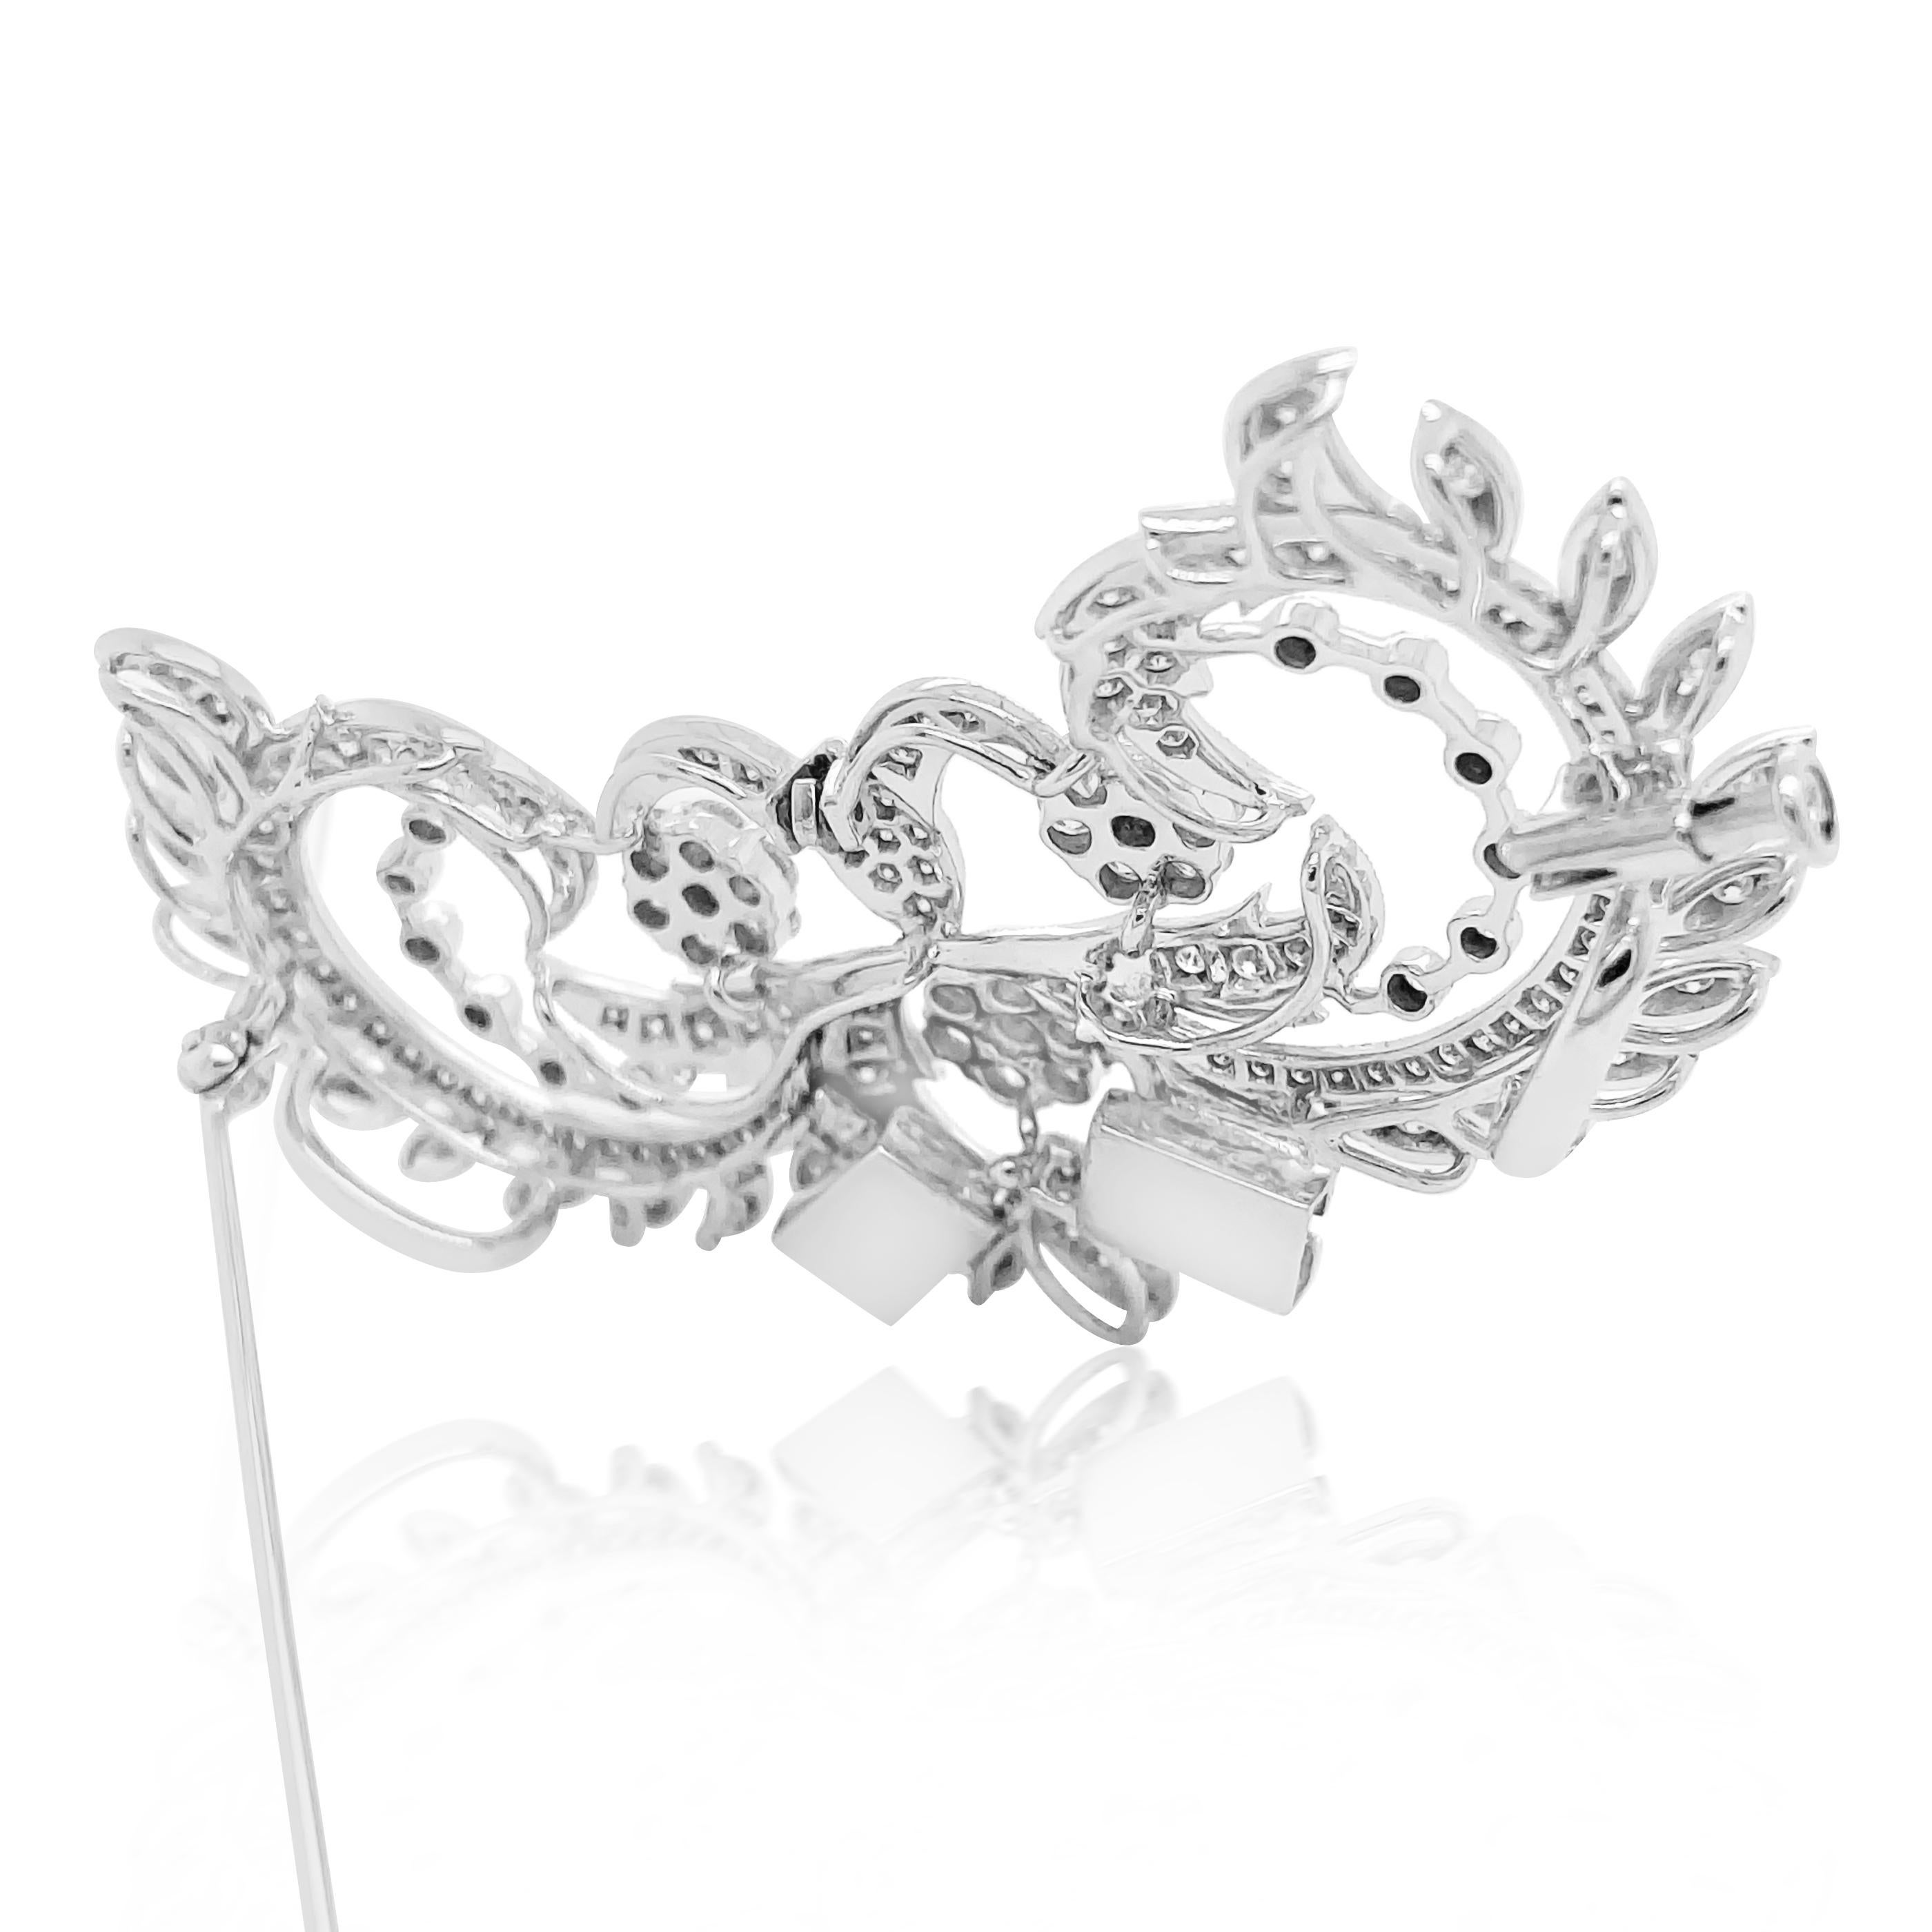 Edwardian Floral Motif Diamond Brooch or Pendant